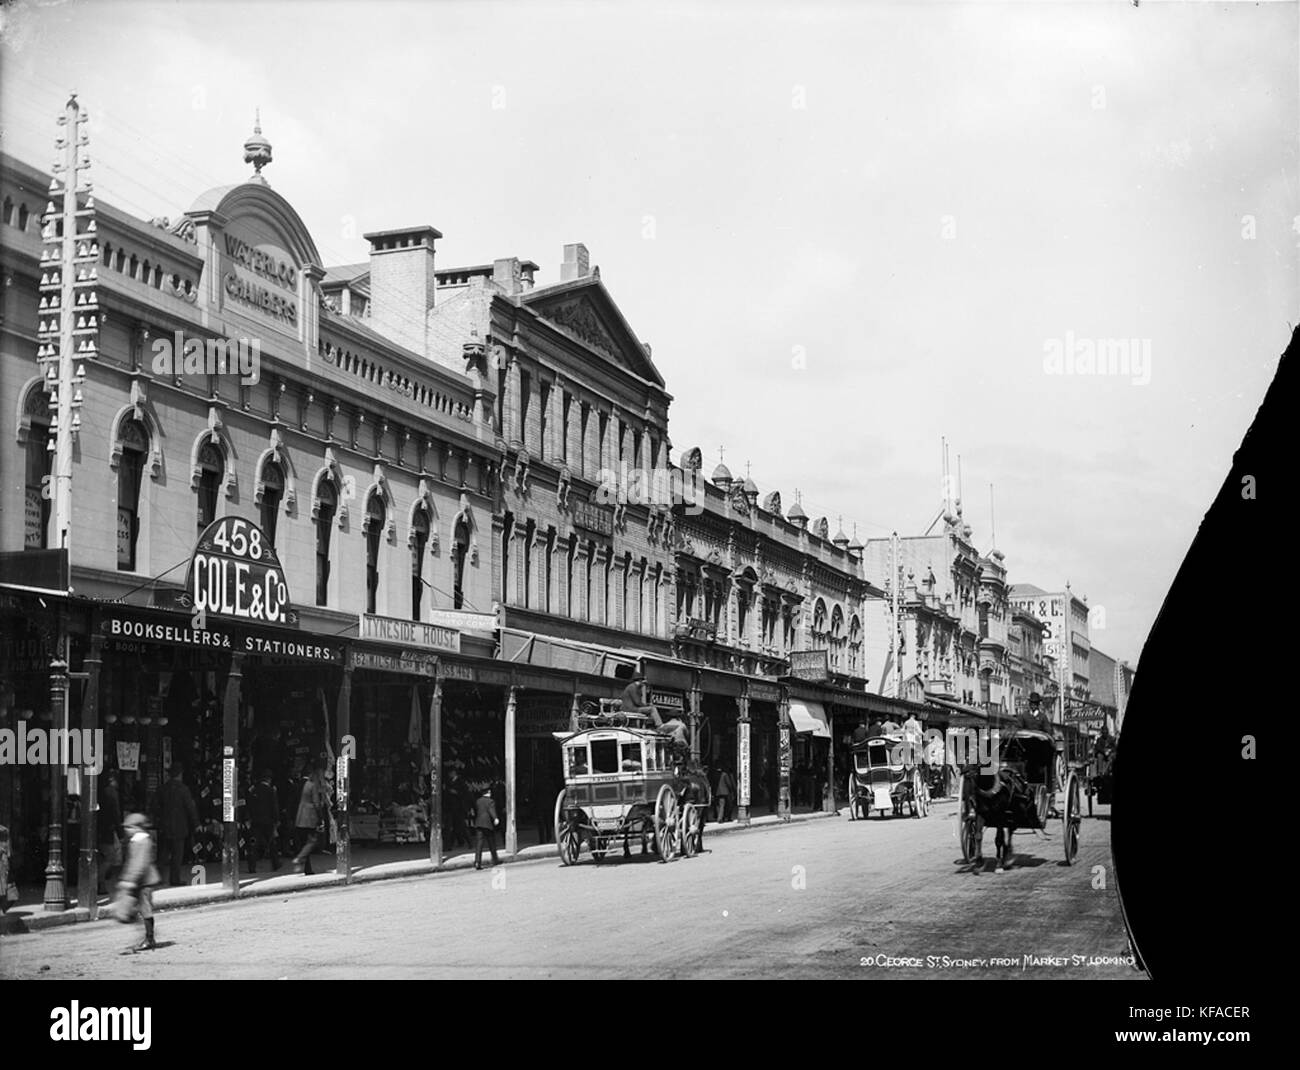 George Street from Market Street, Sydney, c 1900 Stock Photo